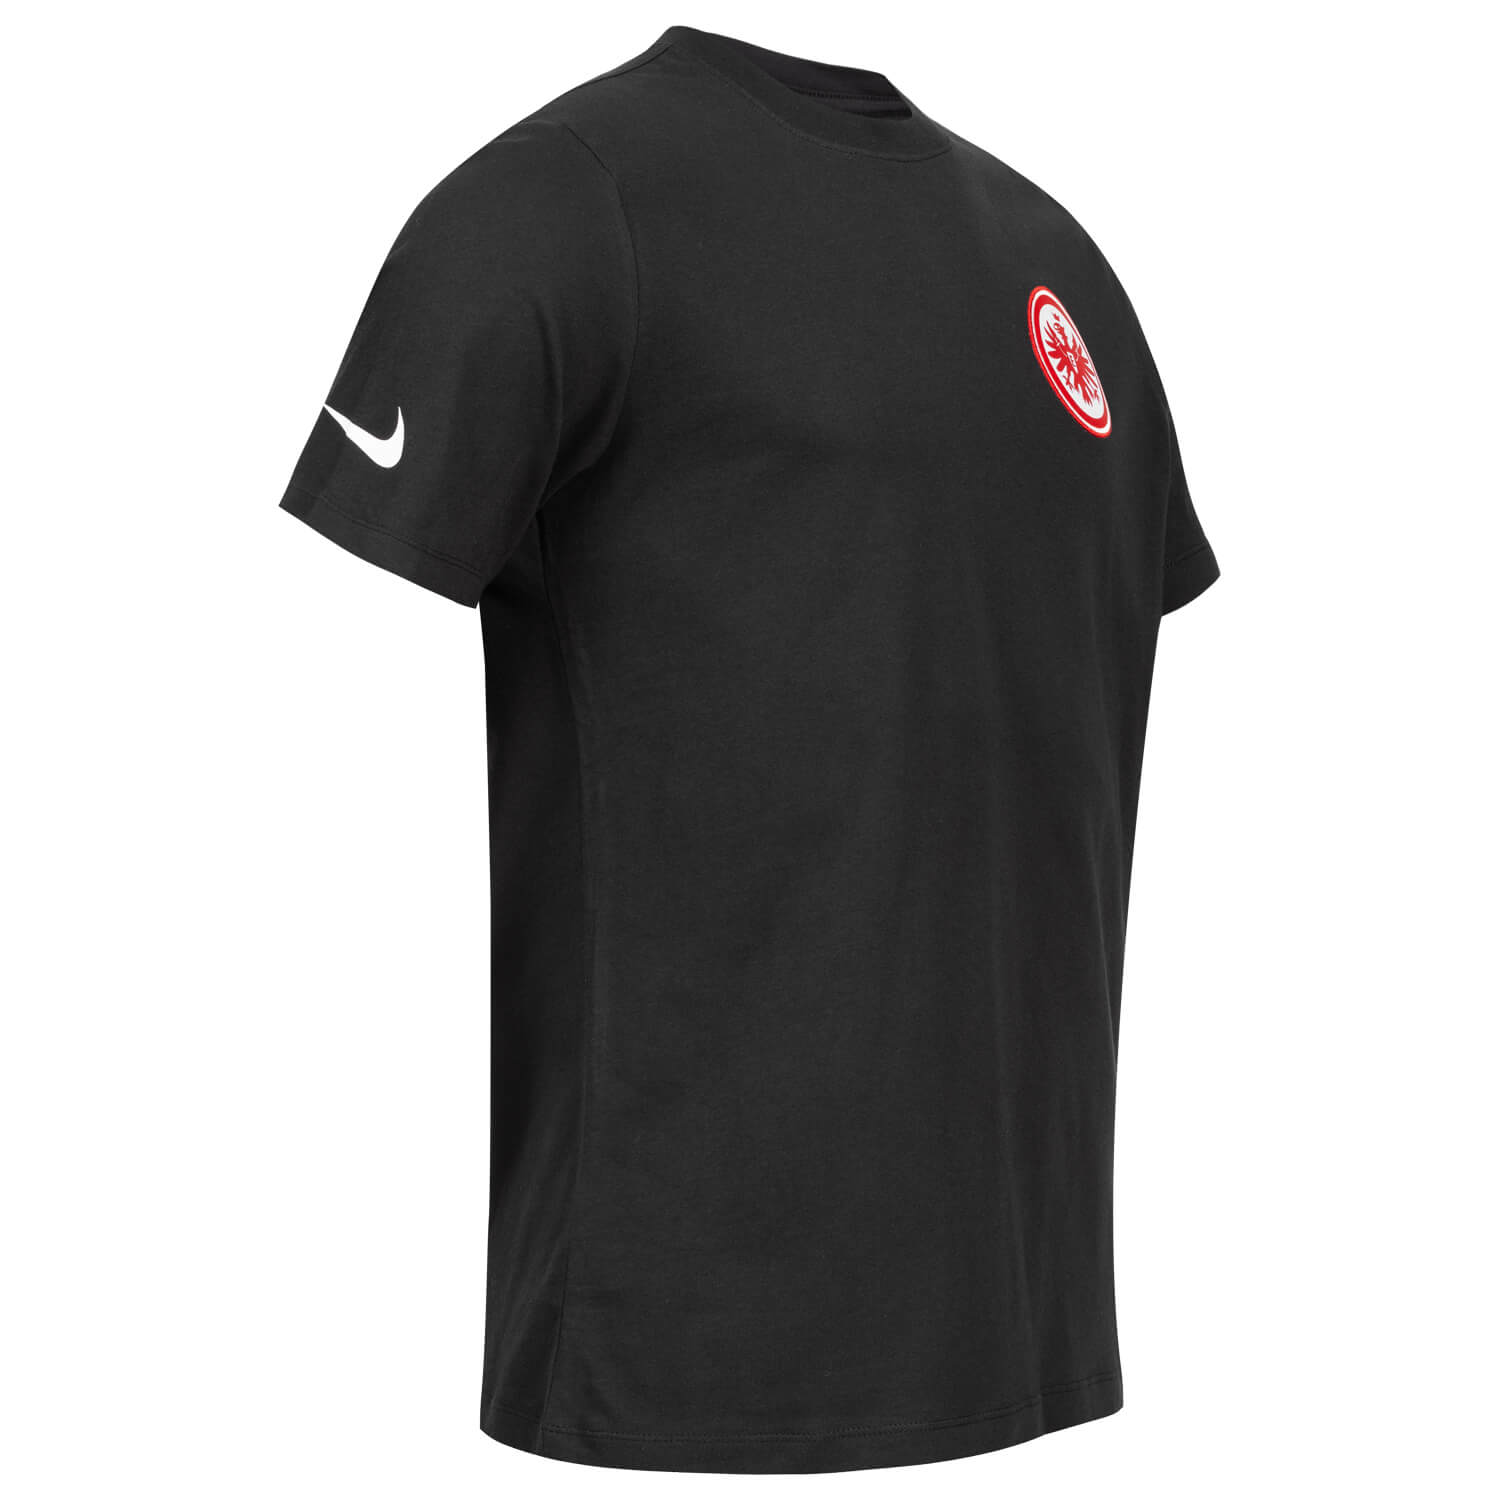 Bild 3: Nike T-Shirt Basic schwarz